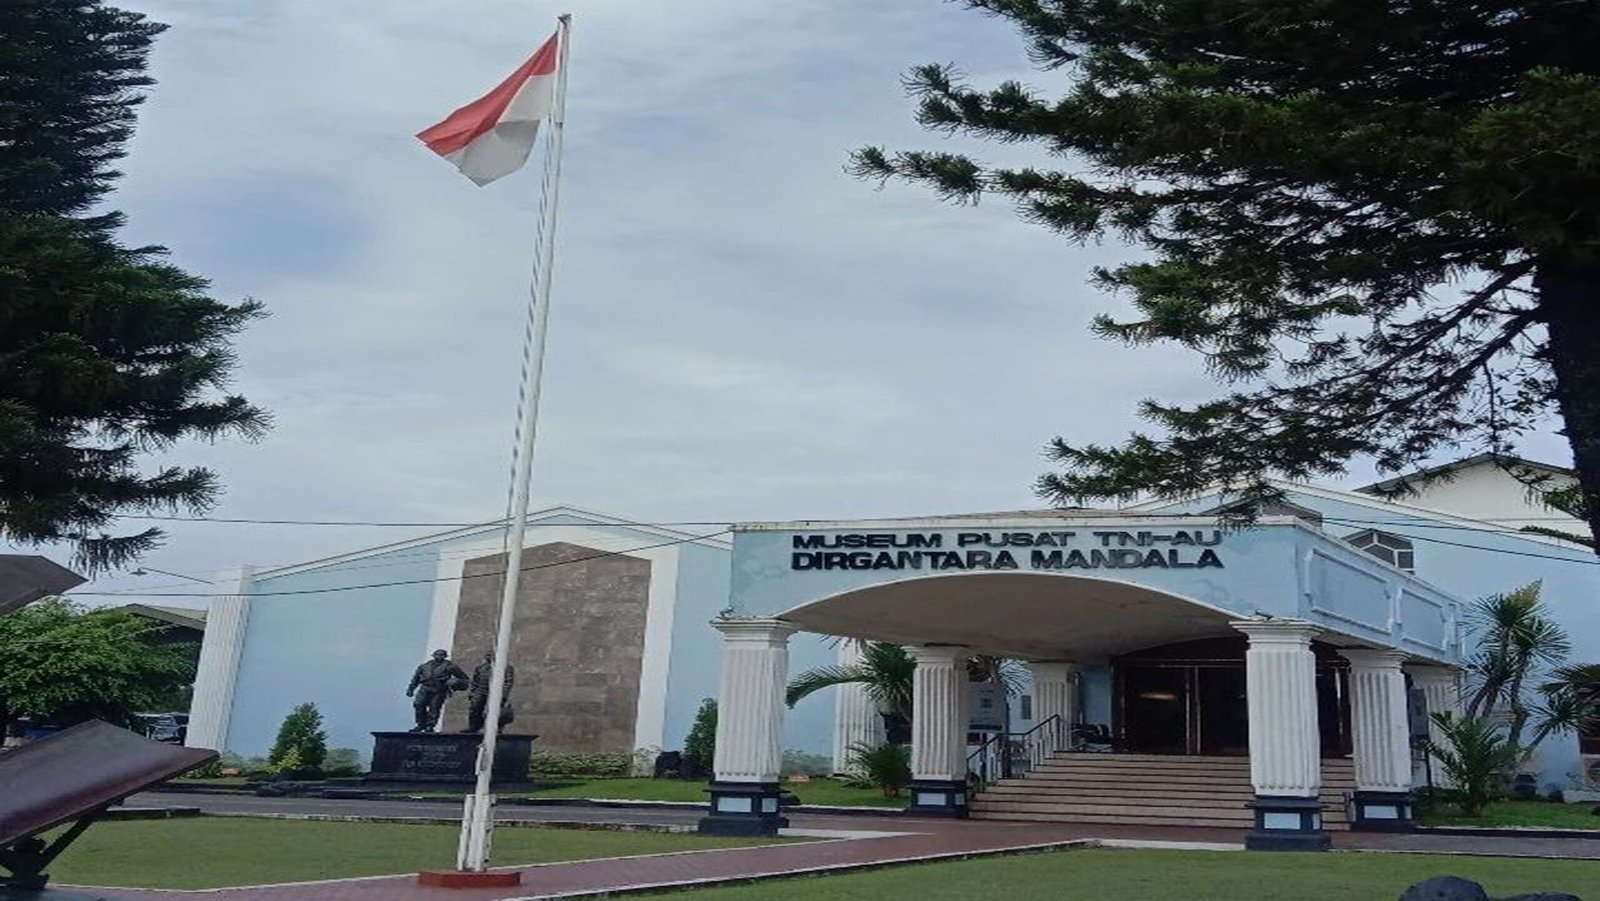 Museum Pusat TNI Angkatan Udara Museum Dirgantara Mandala